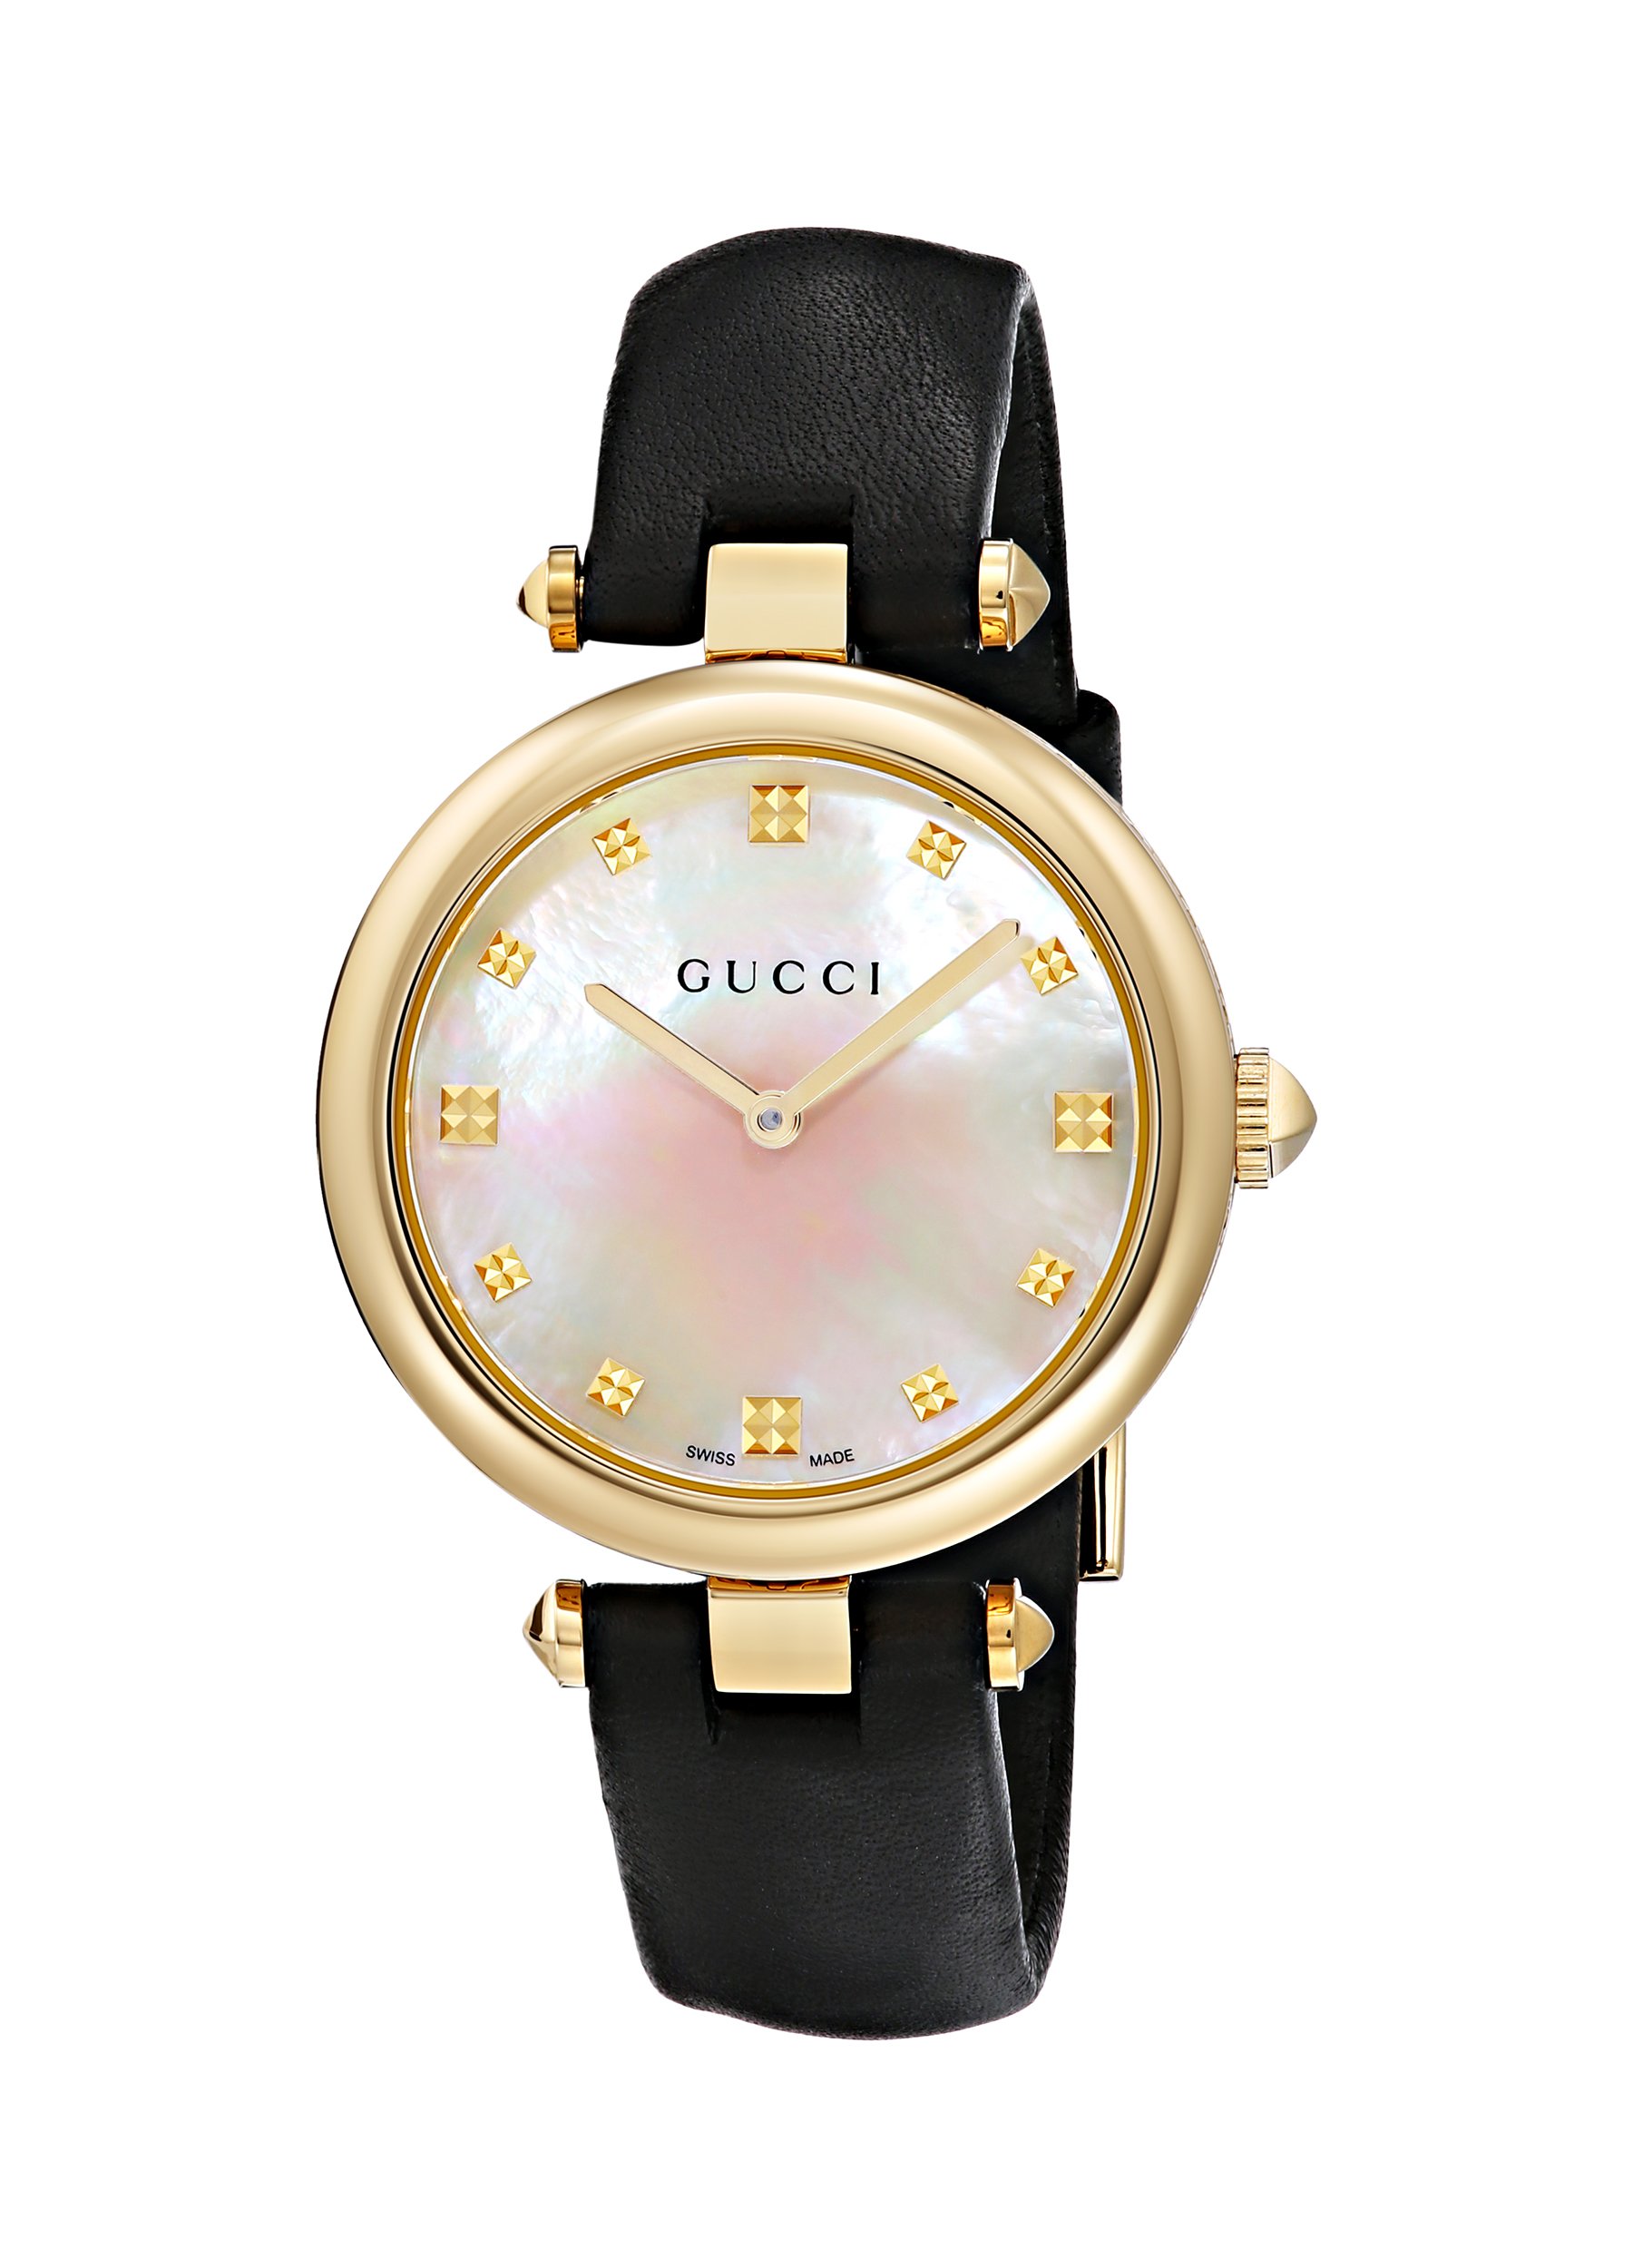 Gucci Swiss Quartz Gold-Tone and Leather Dress Black Women's Watch(Model: YA141404)